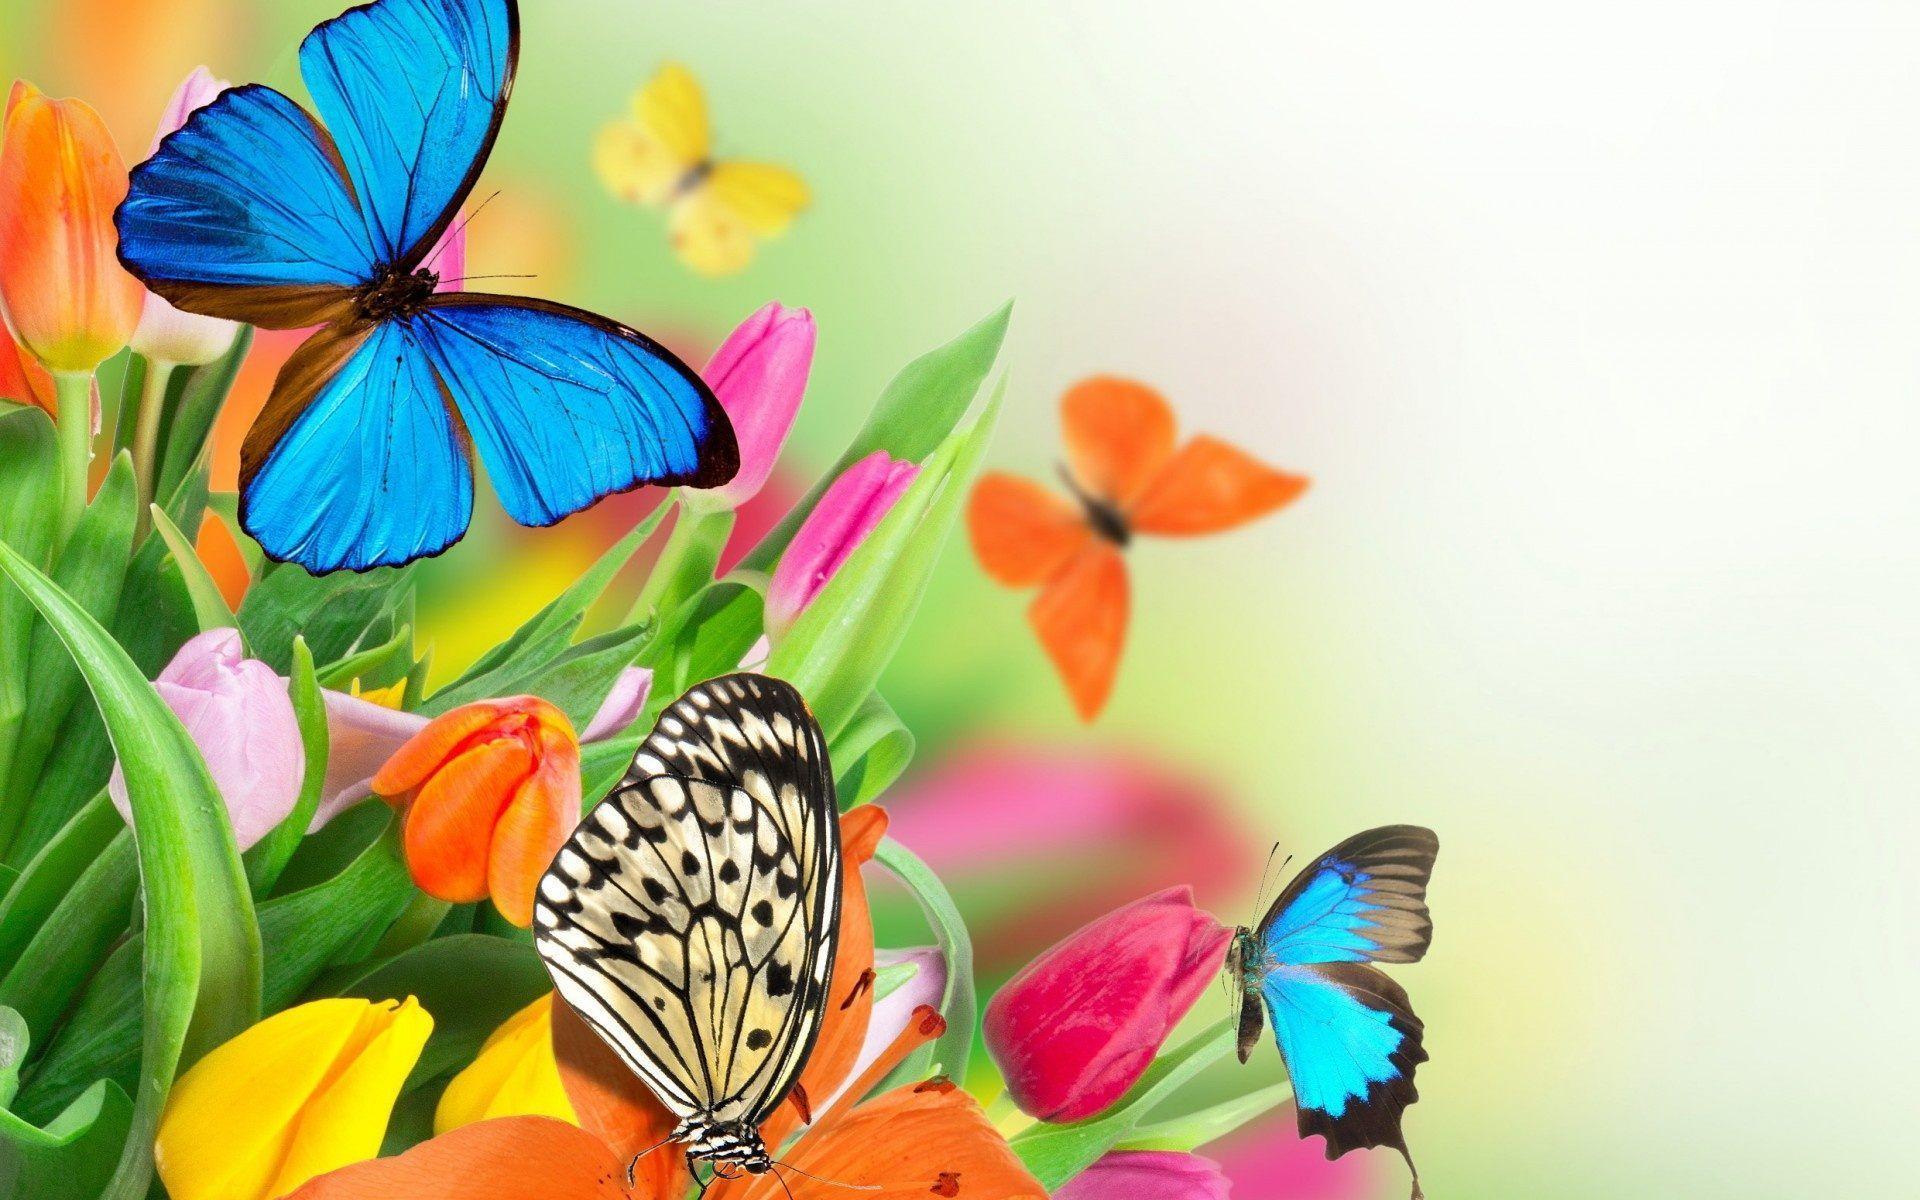 Colorful Butterfly On Flower Wallpaper For Desktop & Mobile